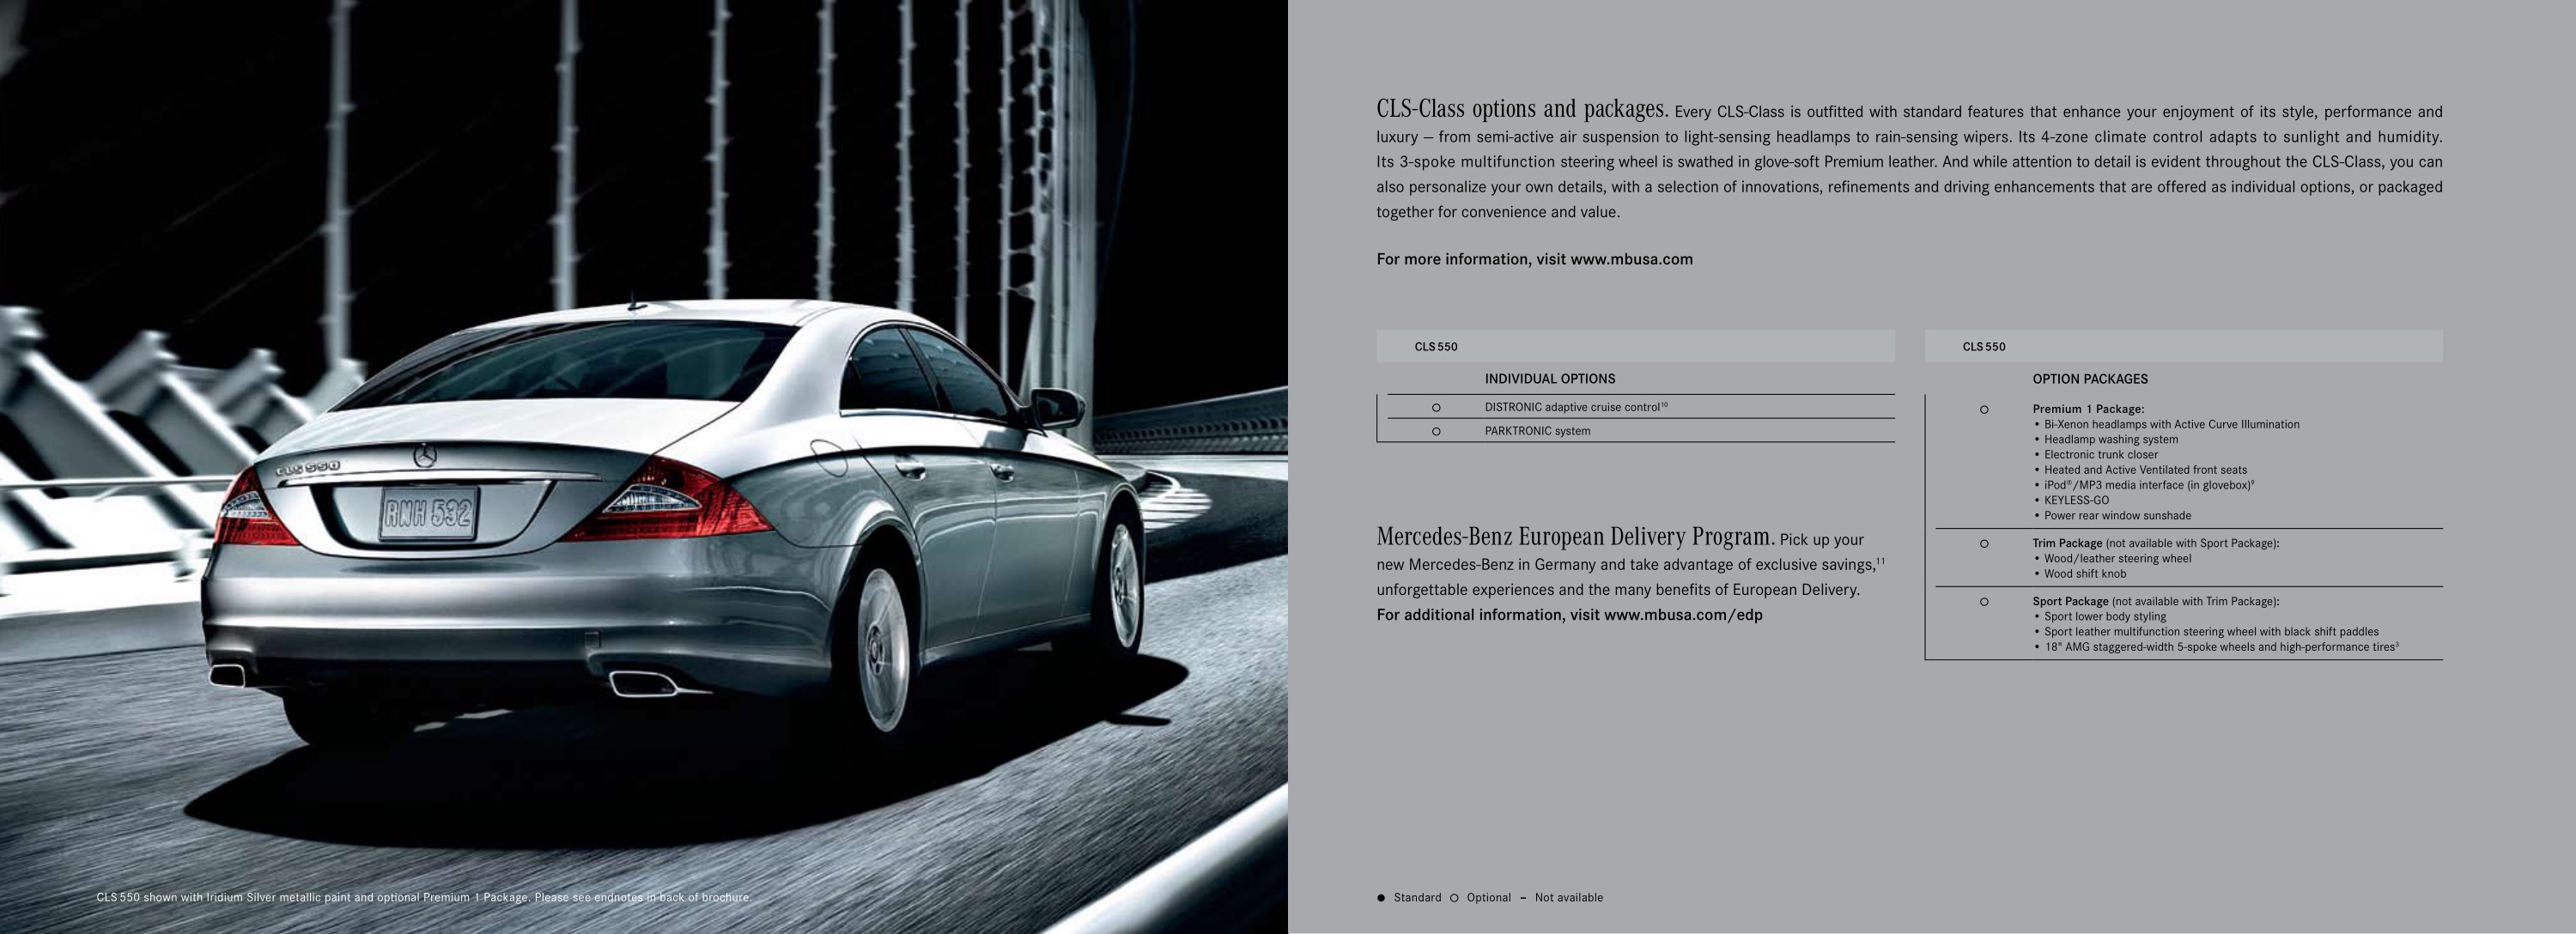 2010 Mercedes-Benz CLS-Class Brochure Page 6